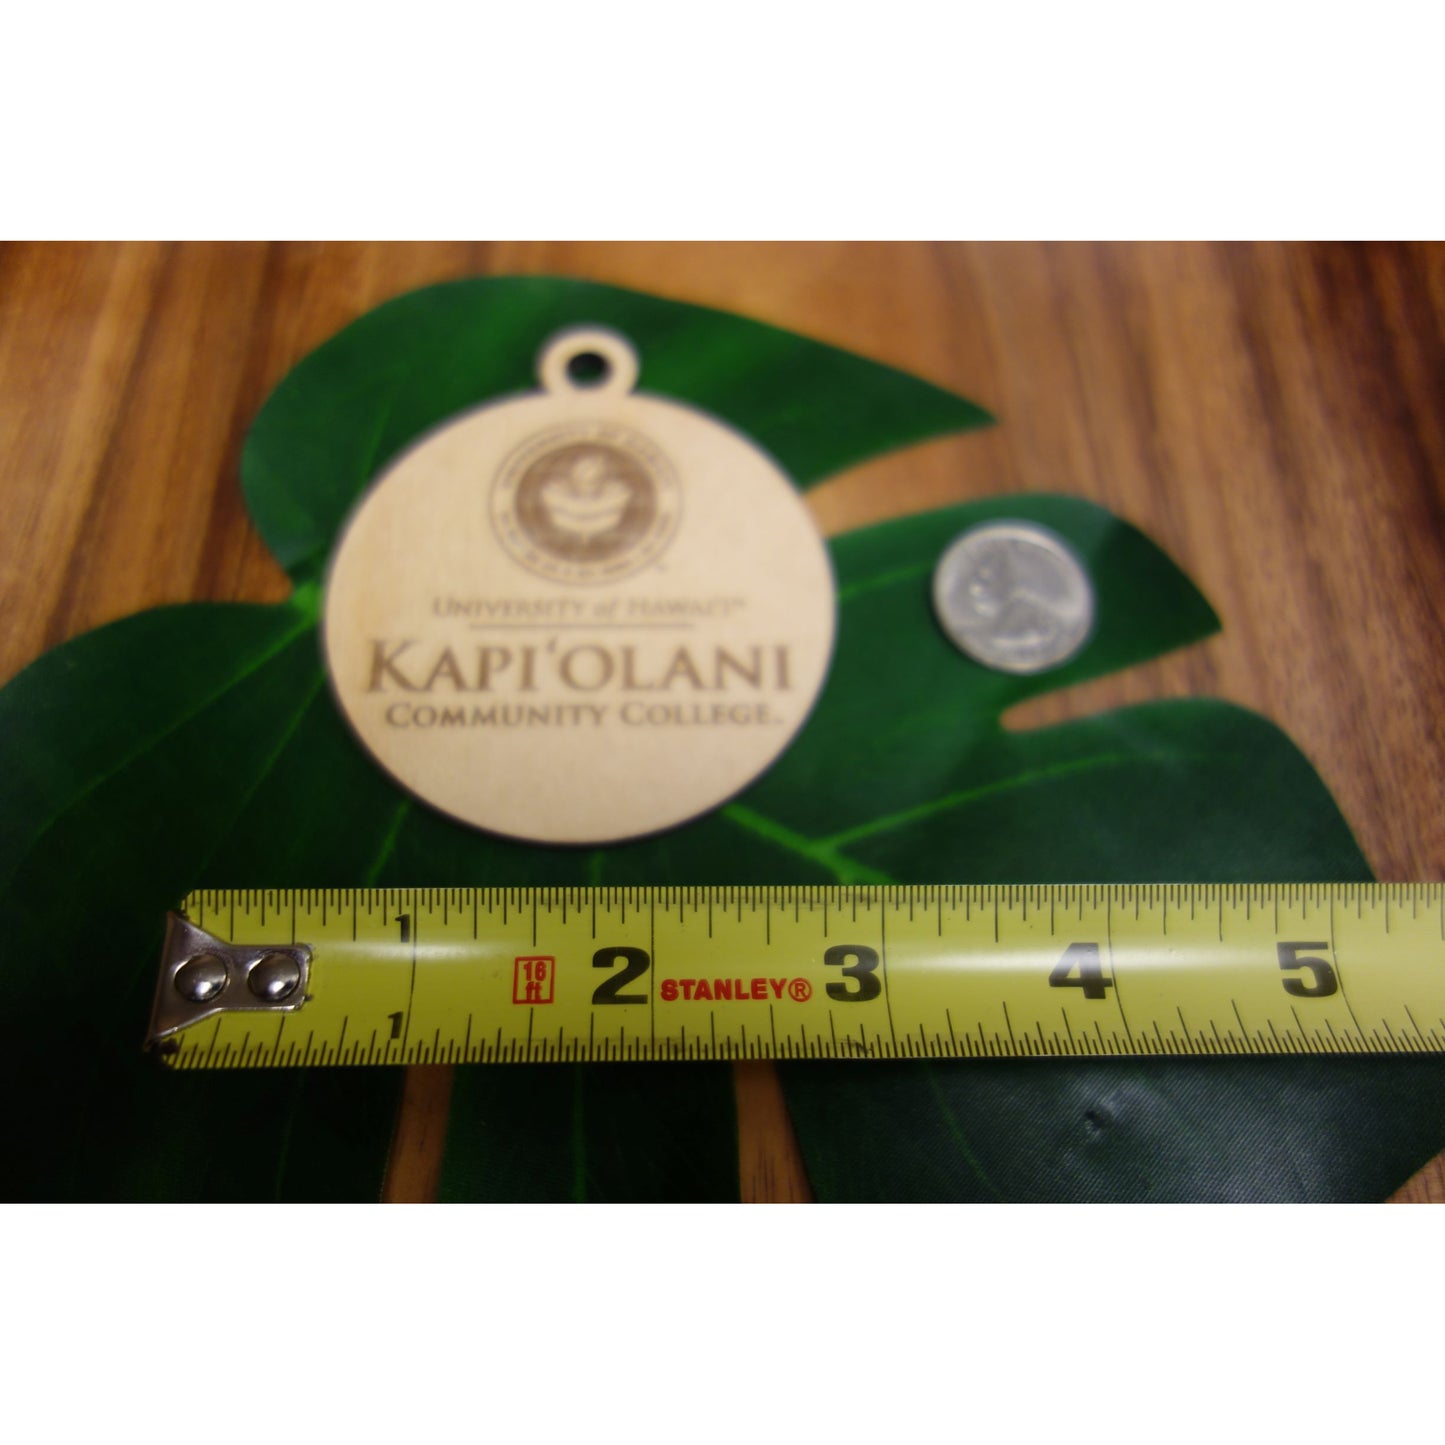 Officially Licensed University of Hawaii Kapiolani Community College Keepsake Ornament